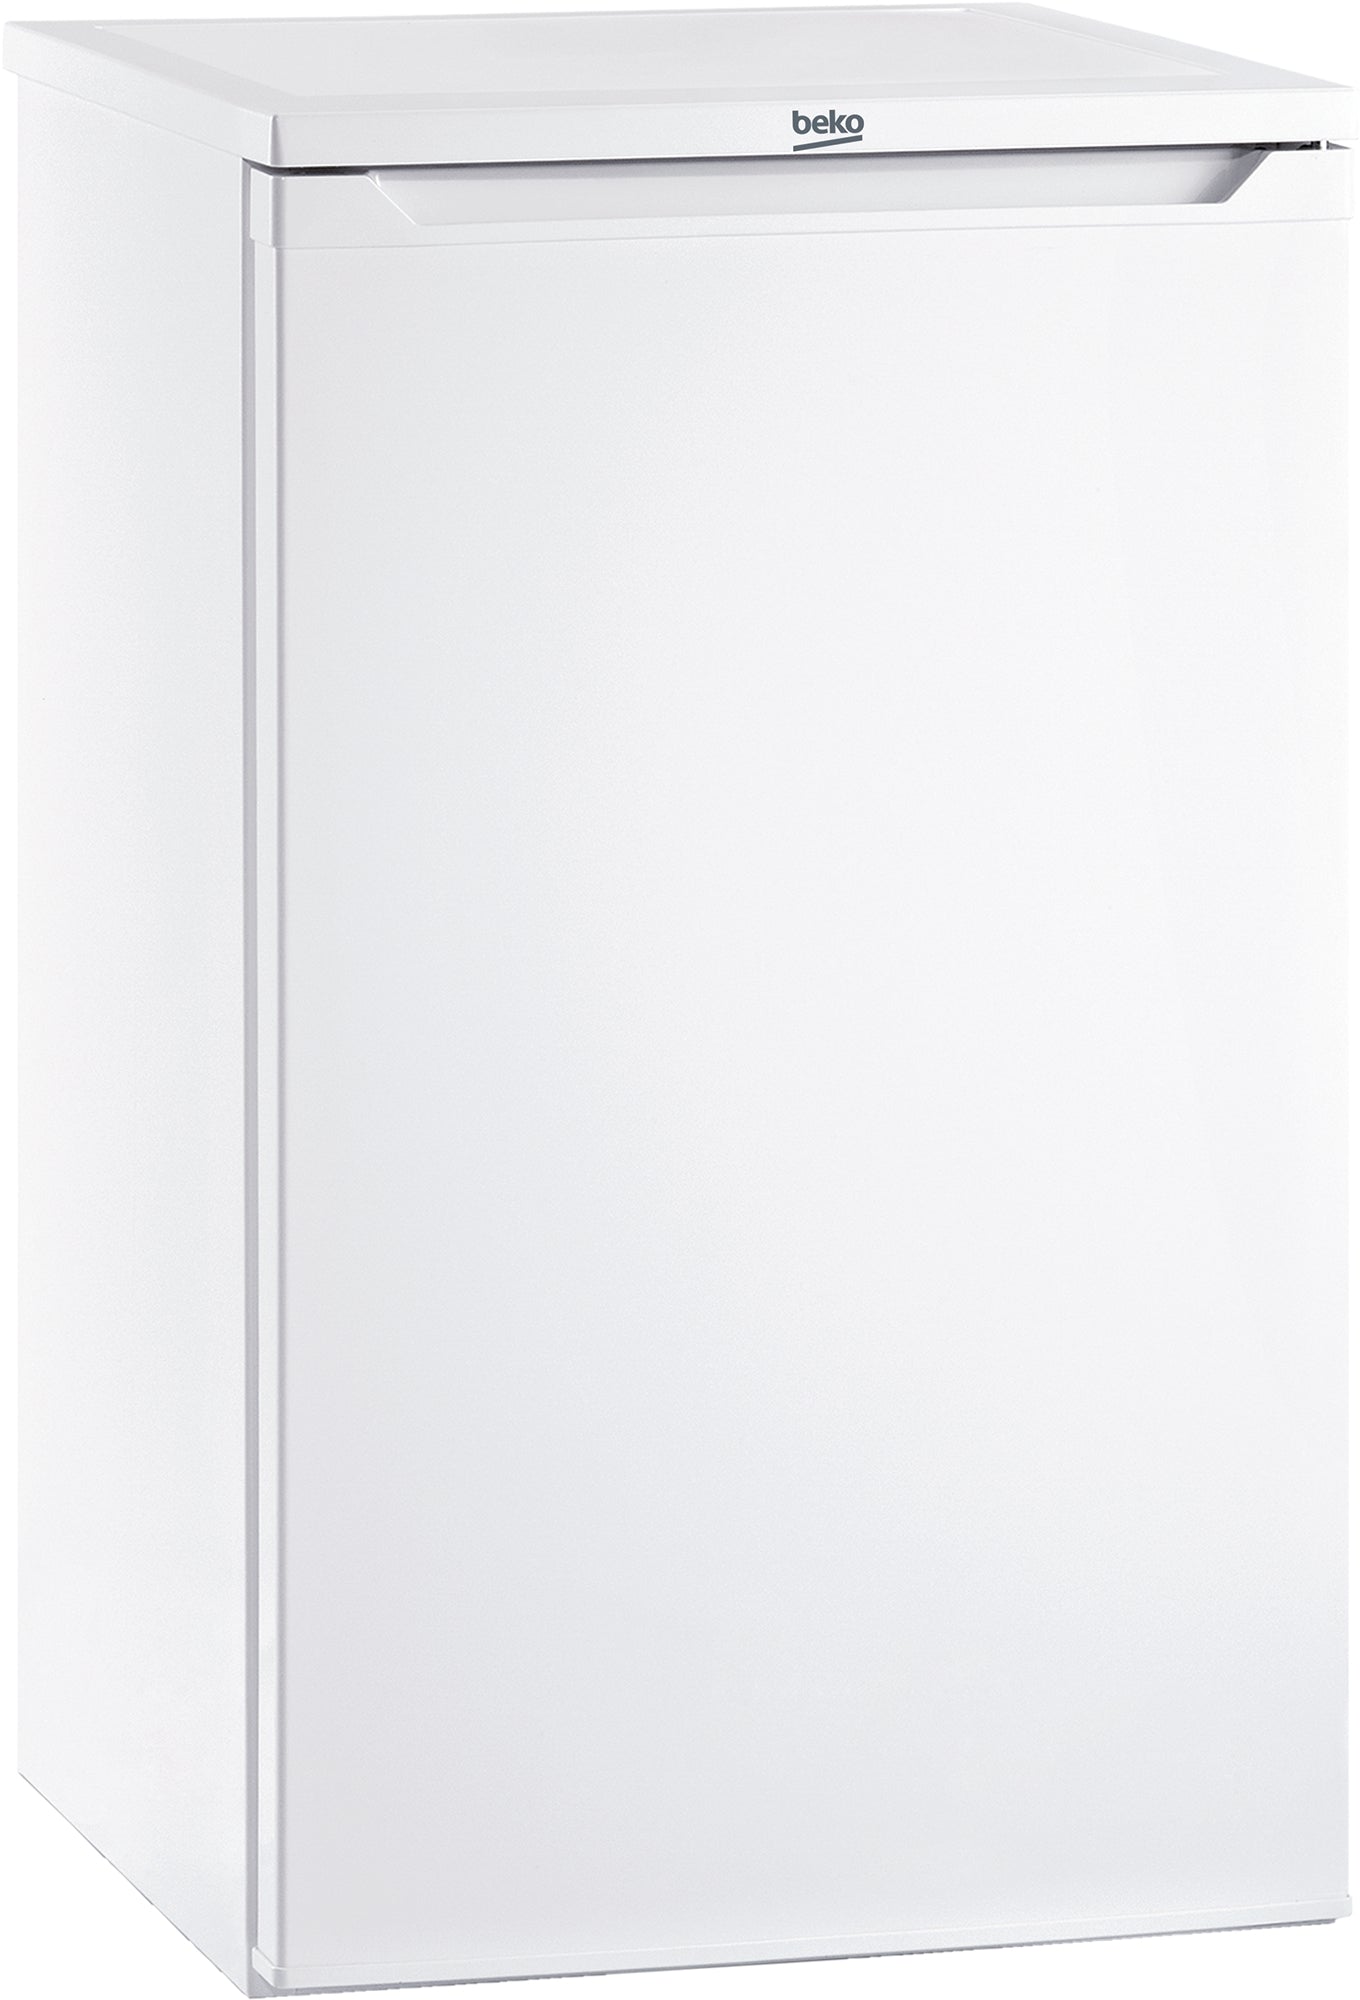 Beko FS4823W 50cm Freestsanding Under Counter Freezer-White